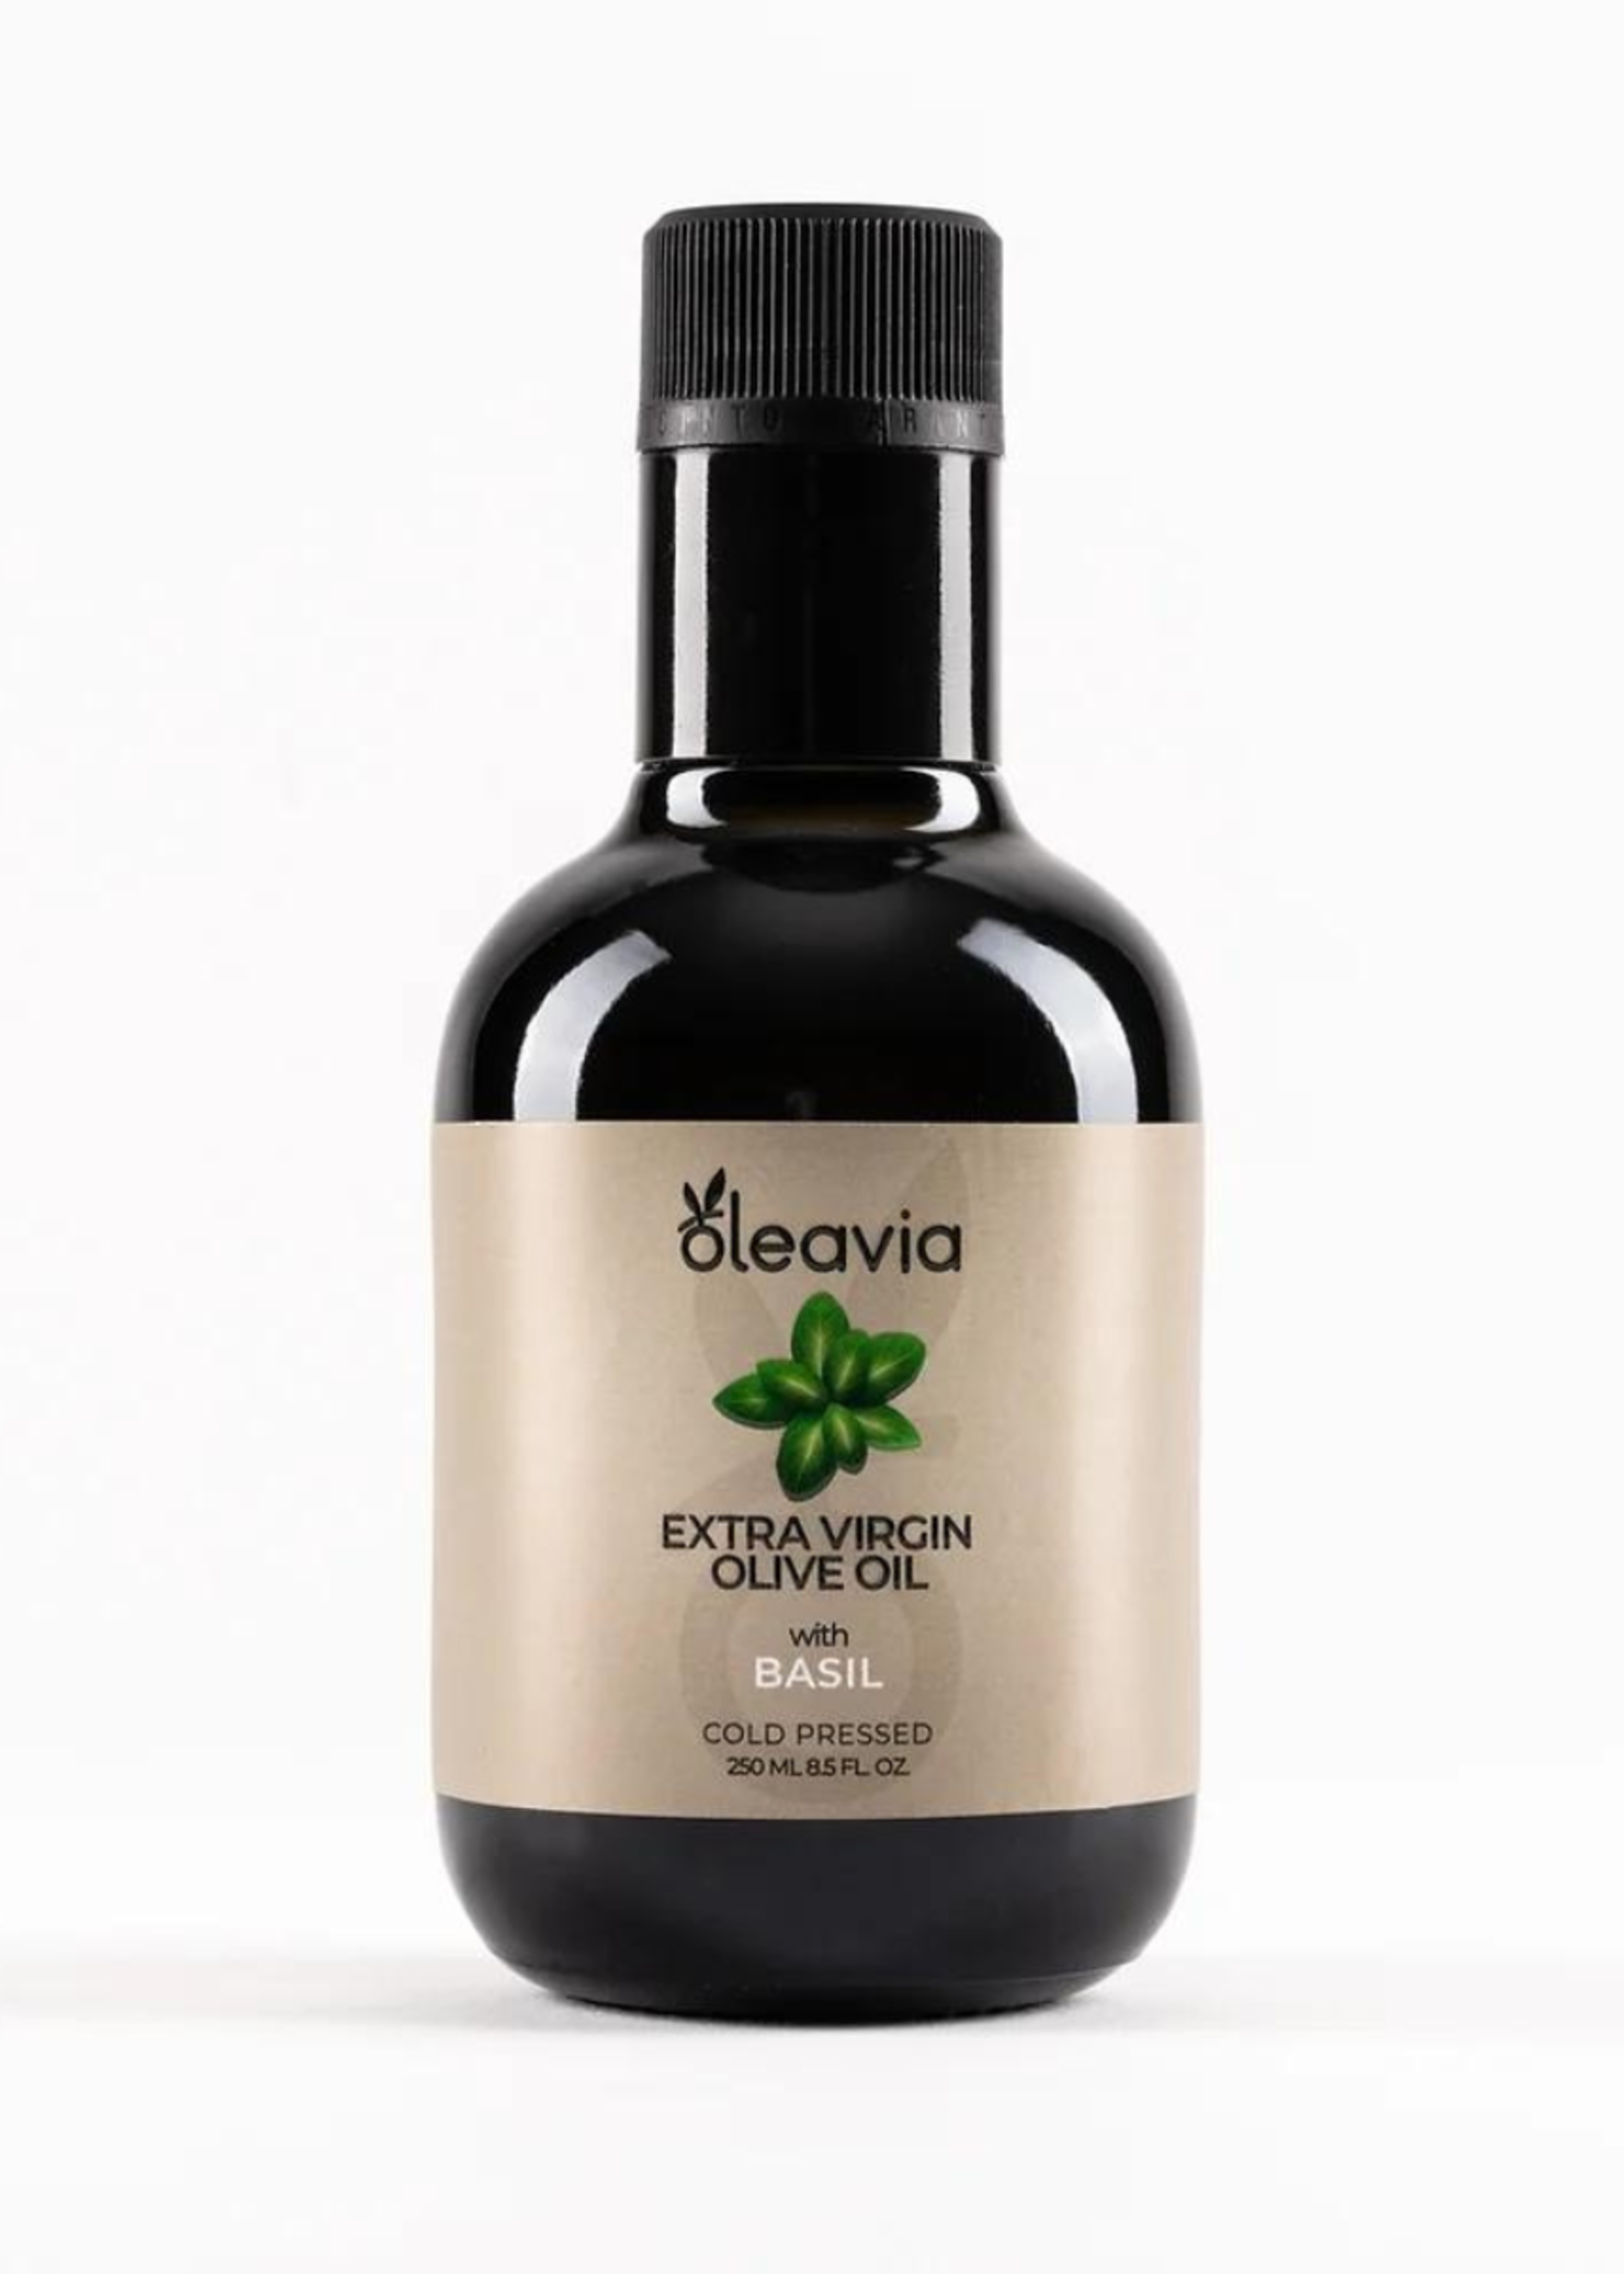 Coccinella Oleavia Basil Olive Oil